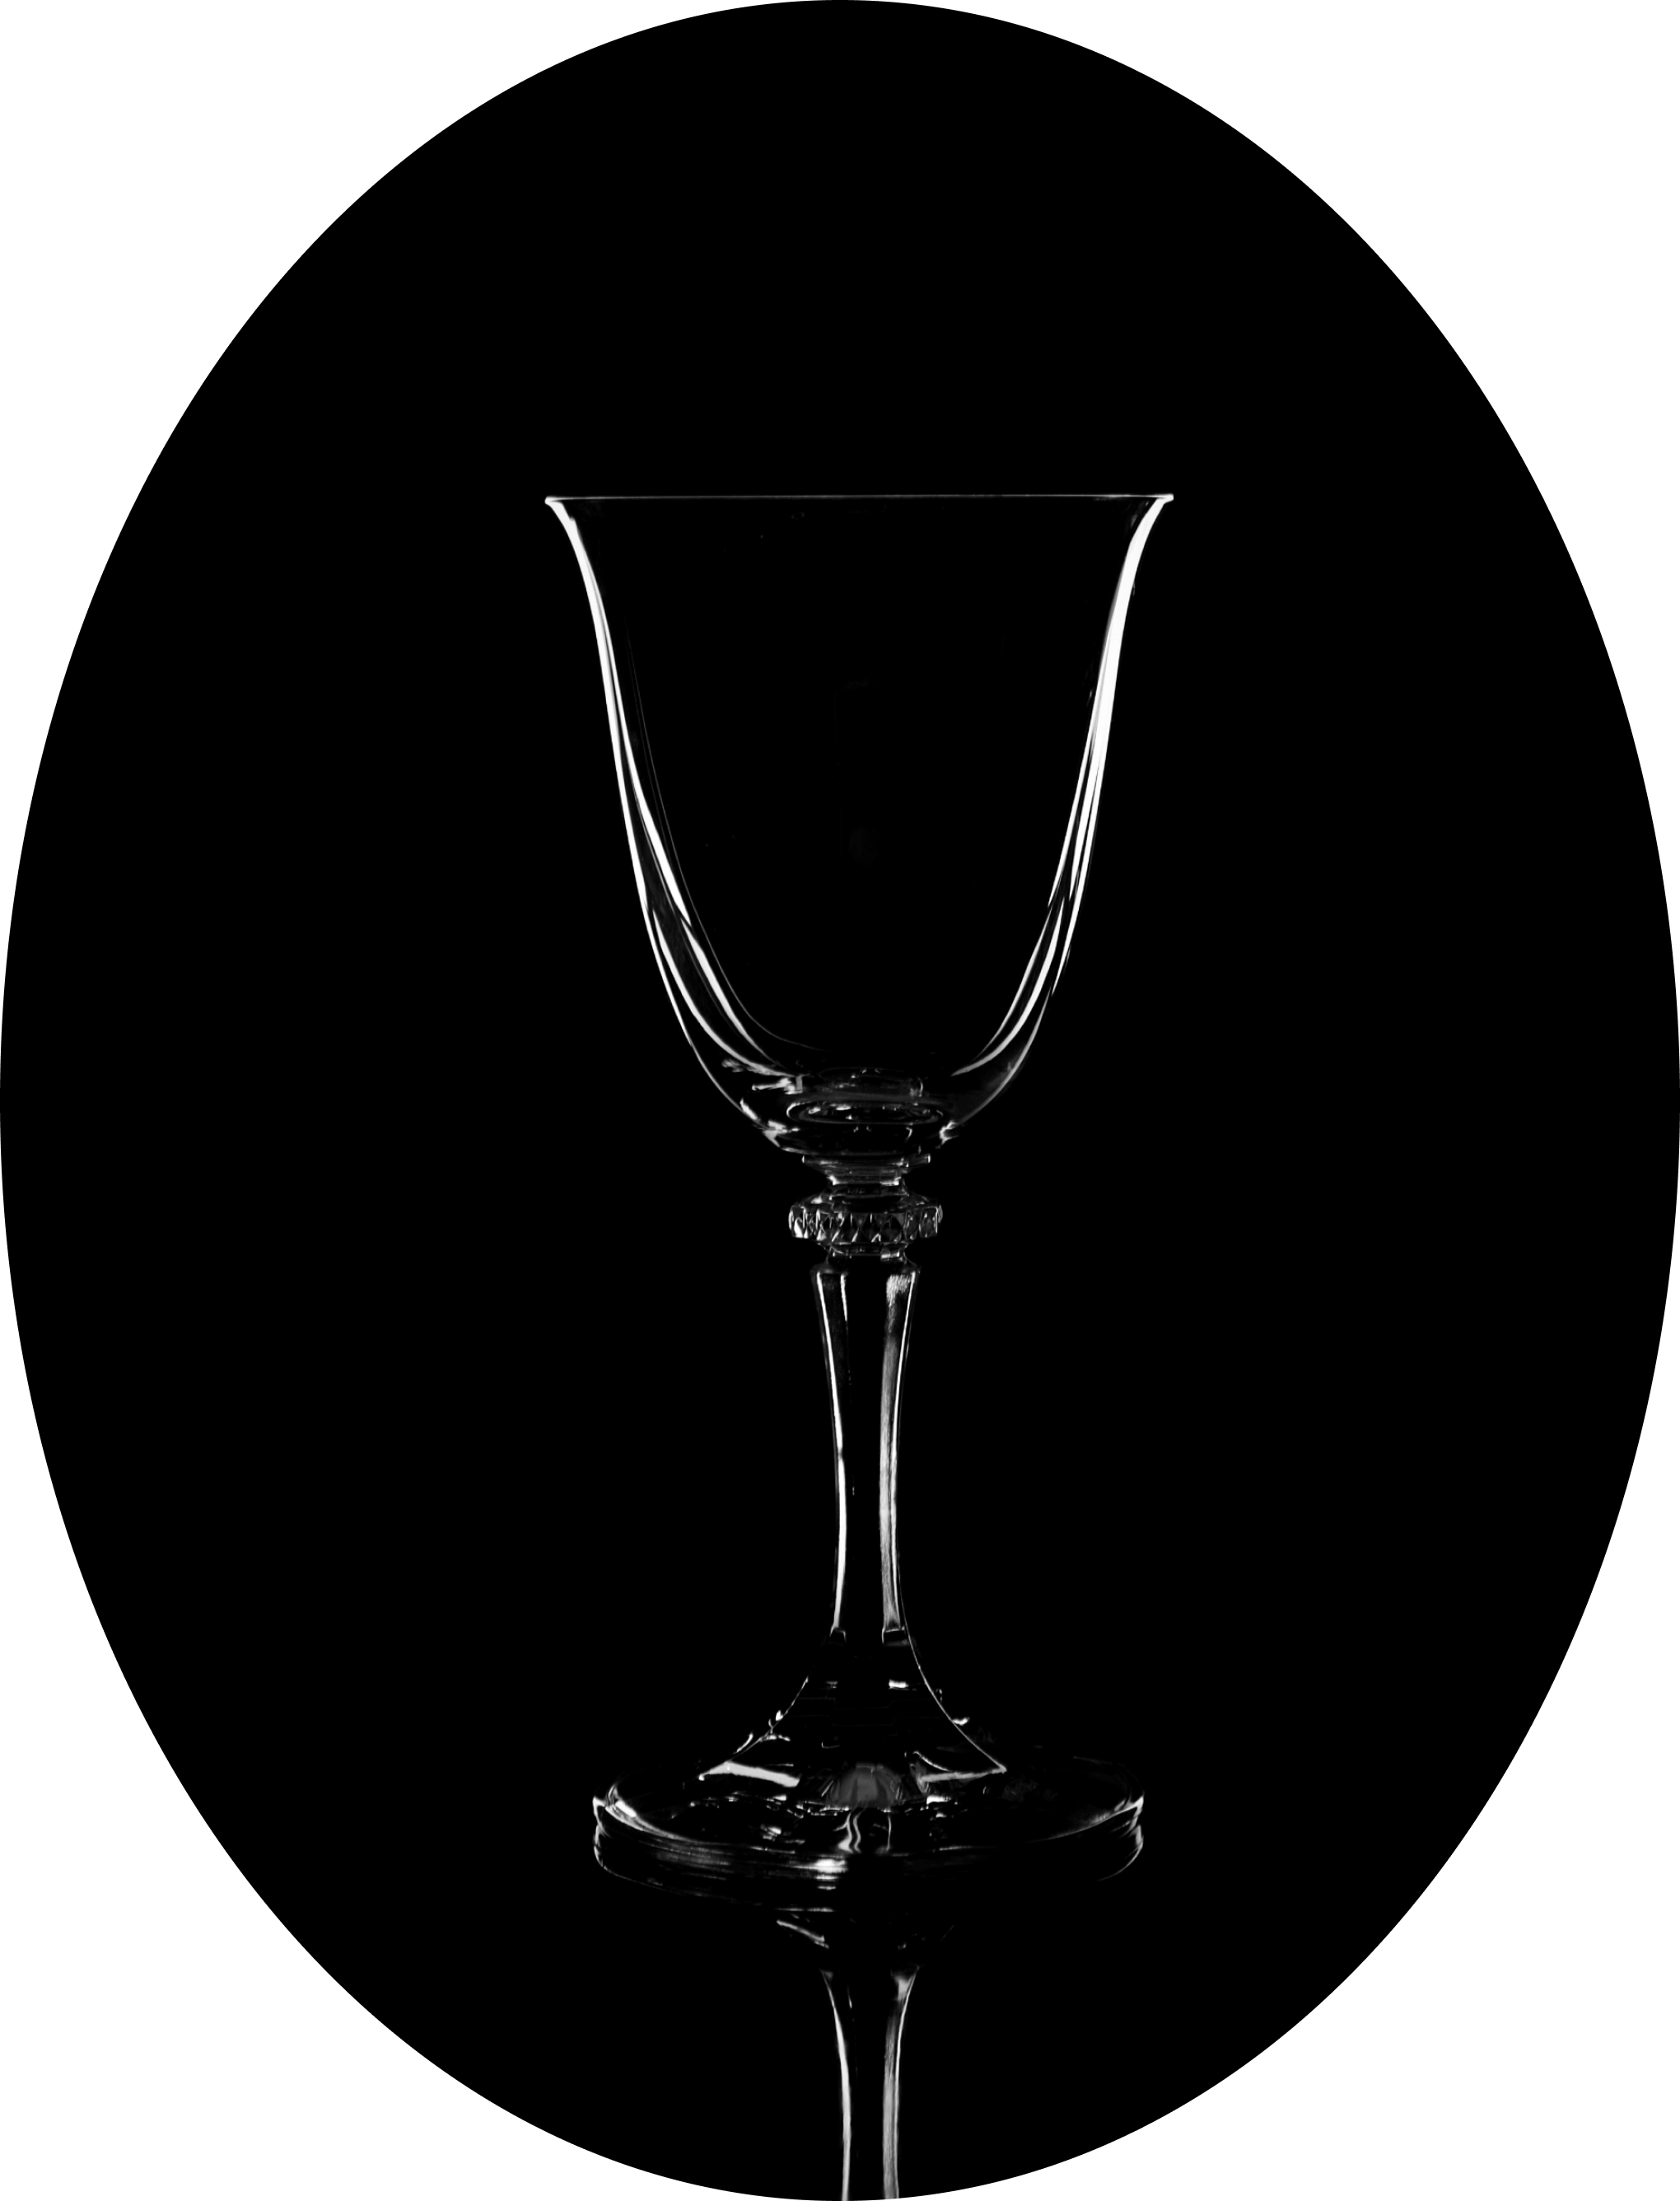 Remarc - like a glass of luxury wine